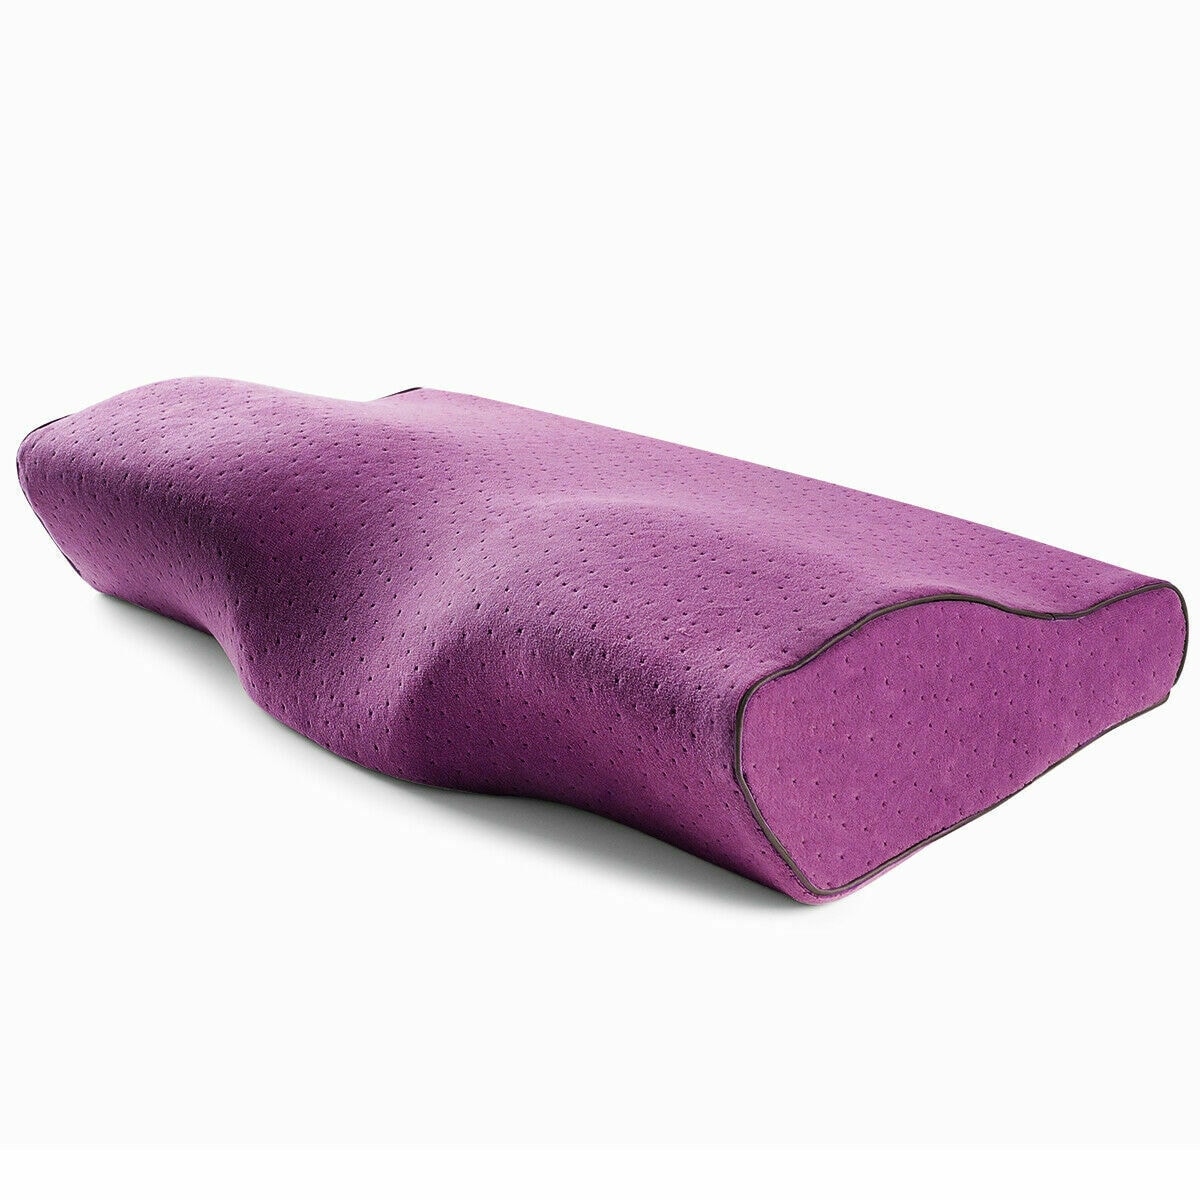 NICE~Contour Memory Foam Pillow Orthopedic Sleeping Pillows